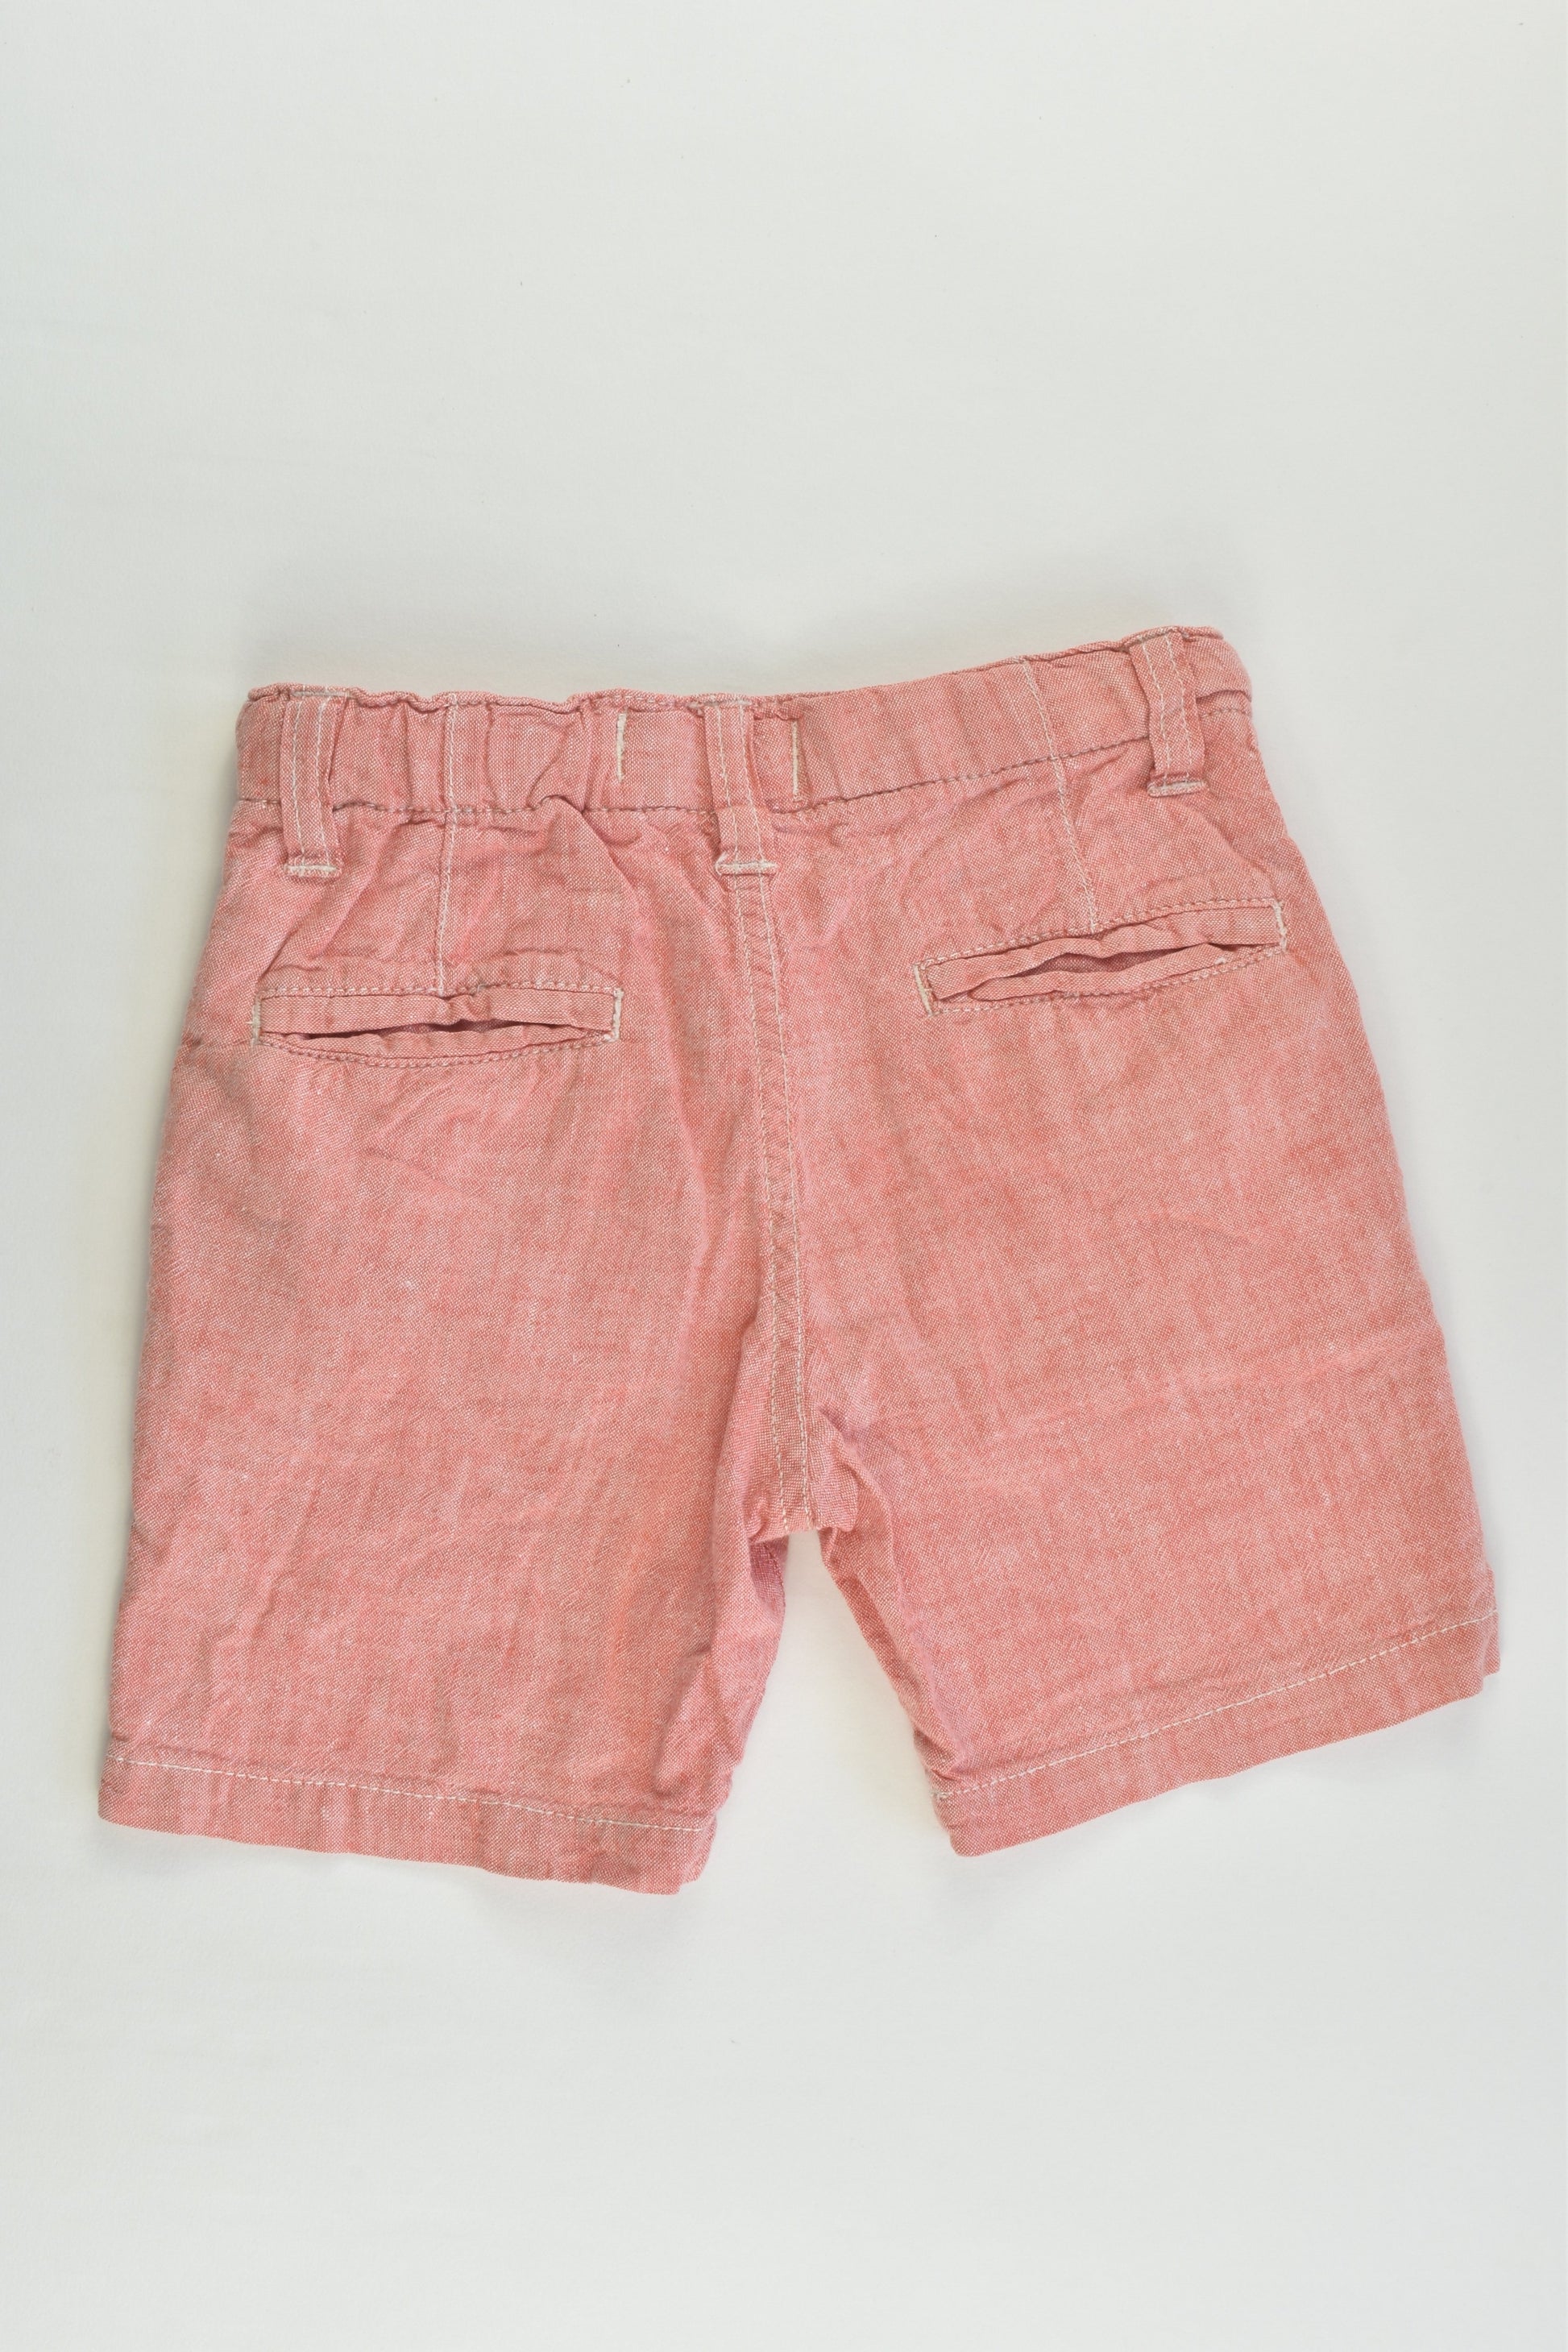 Zara Size 2-3 (98 cm) Linen/Cotton Shorts